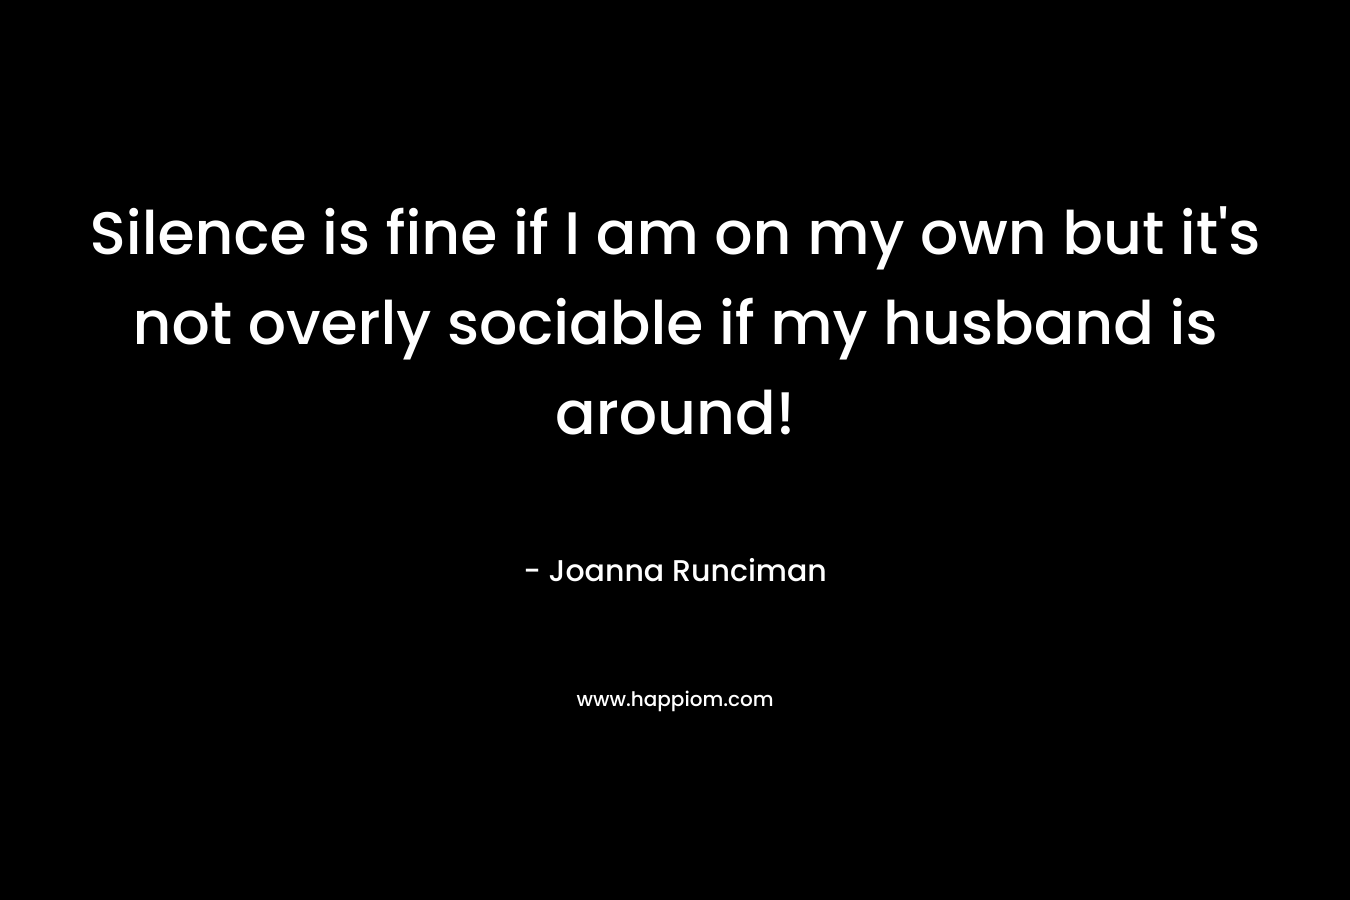 Silence is fine if I am on my own but it's not overly sociable if my husband is around!